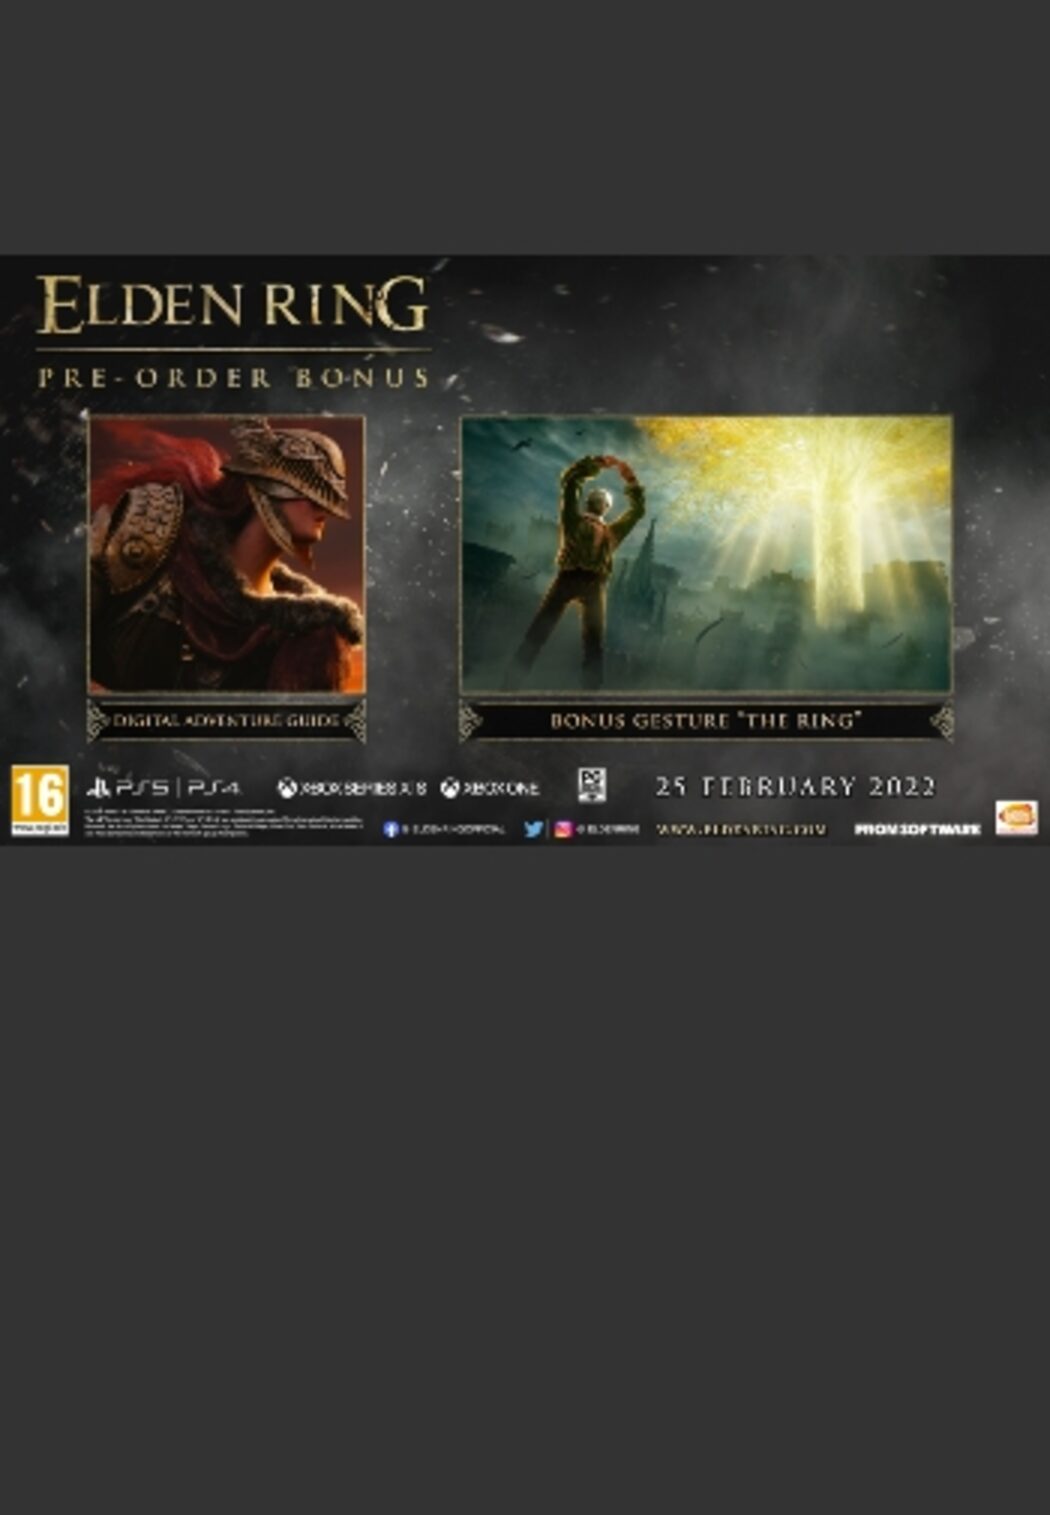 Buy ELDEN RING Steam Key, Instant Delivery